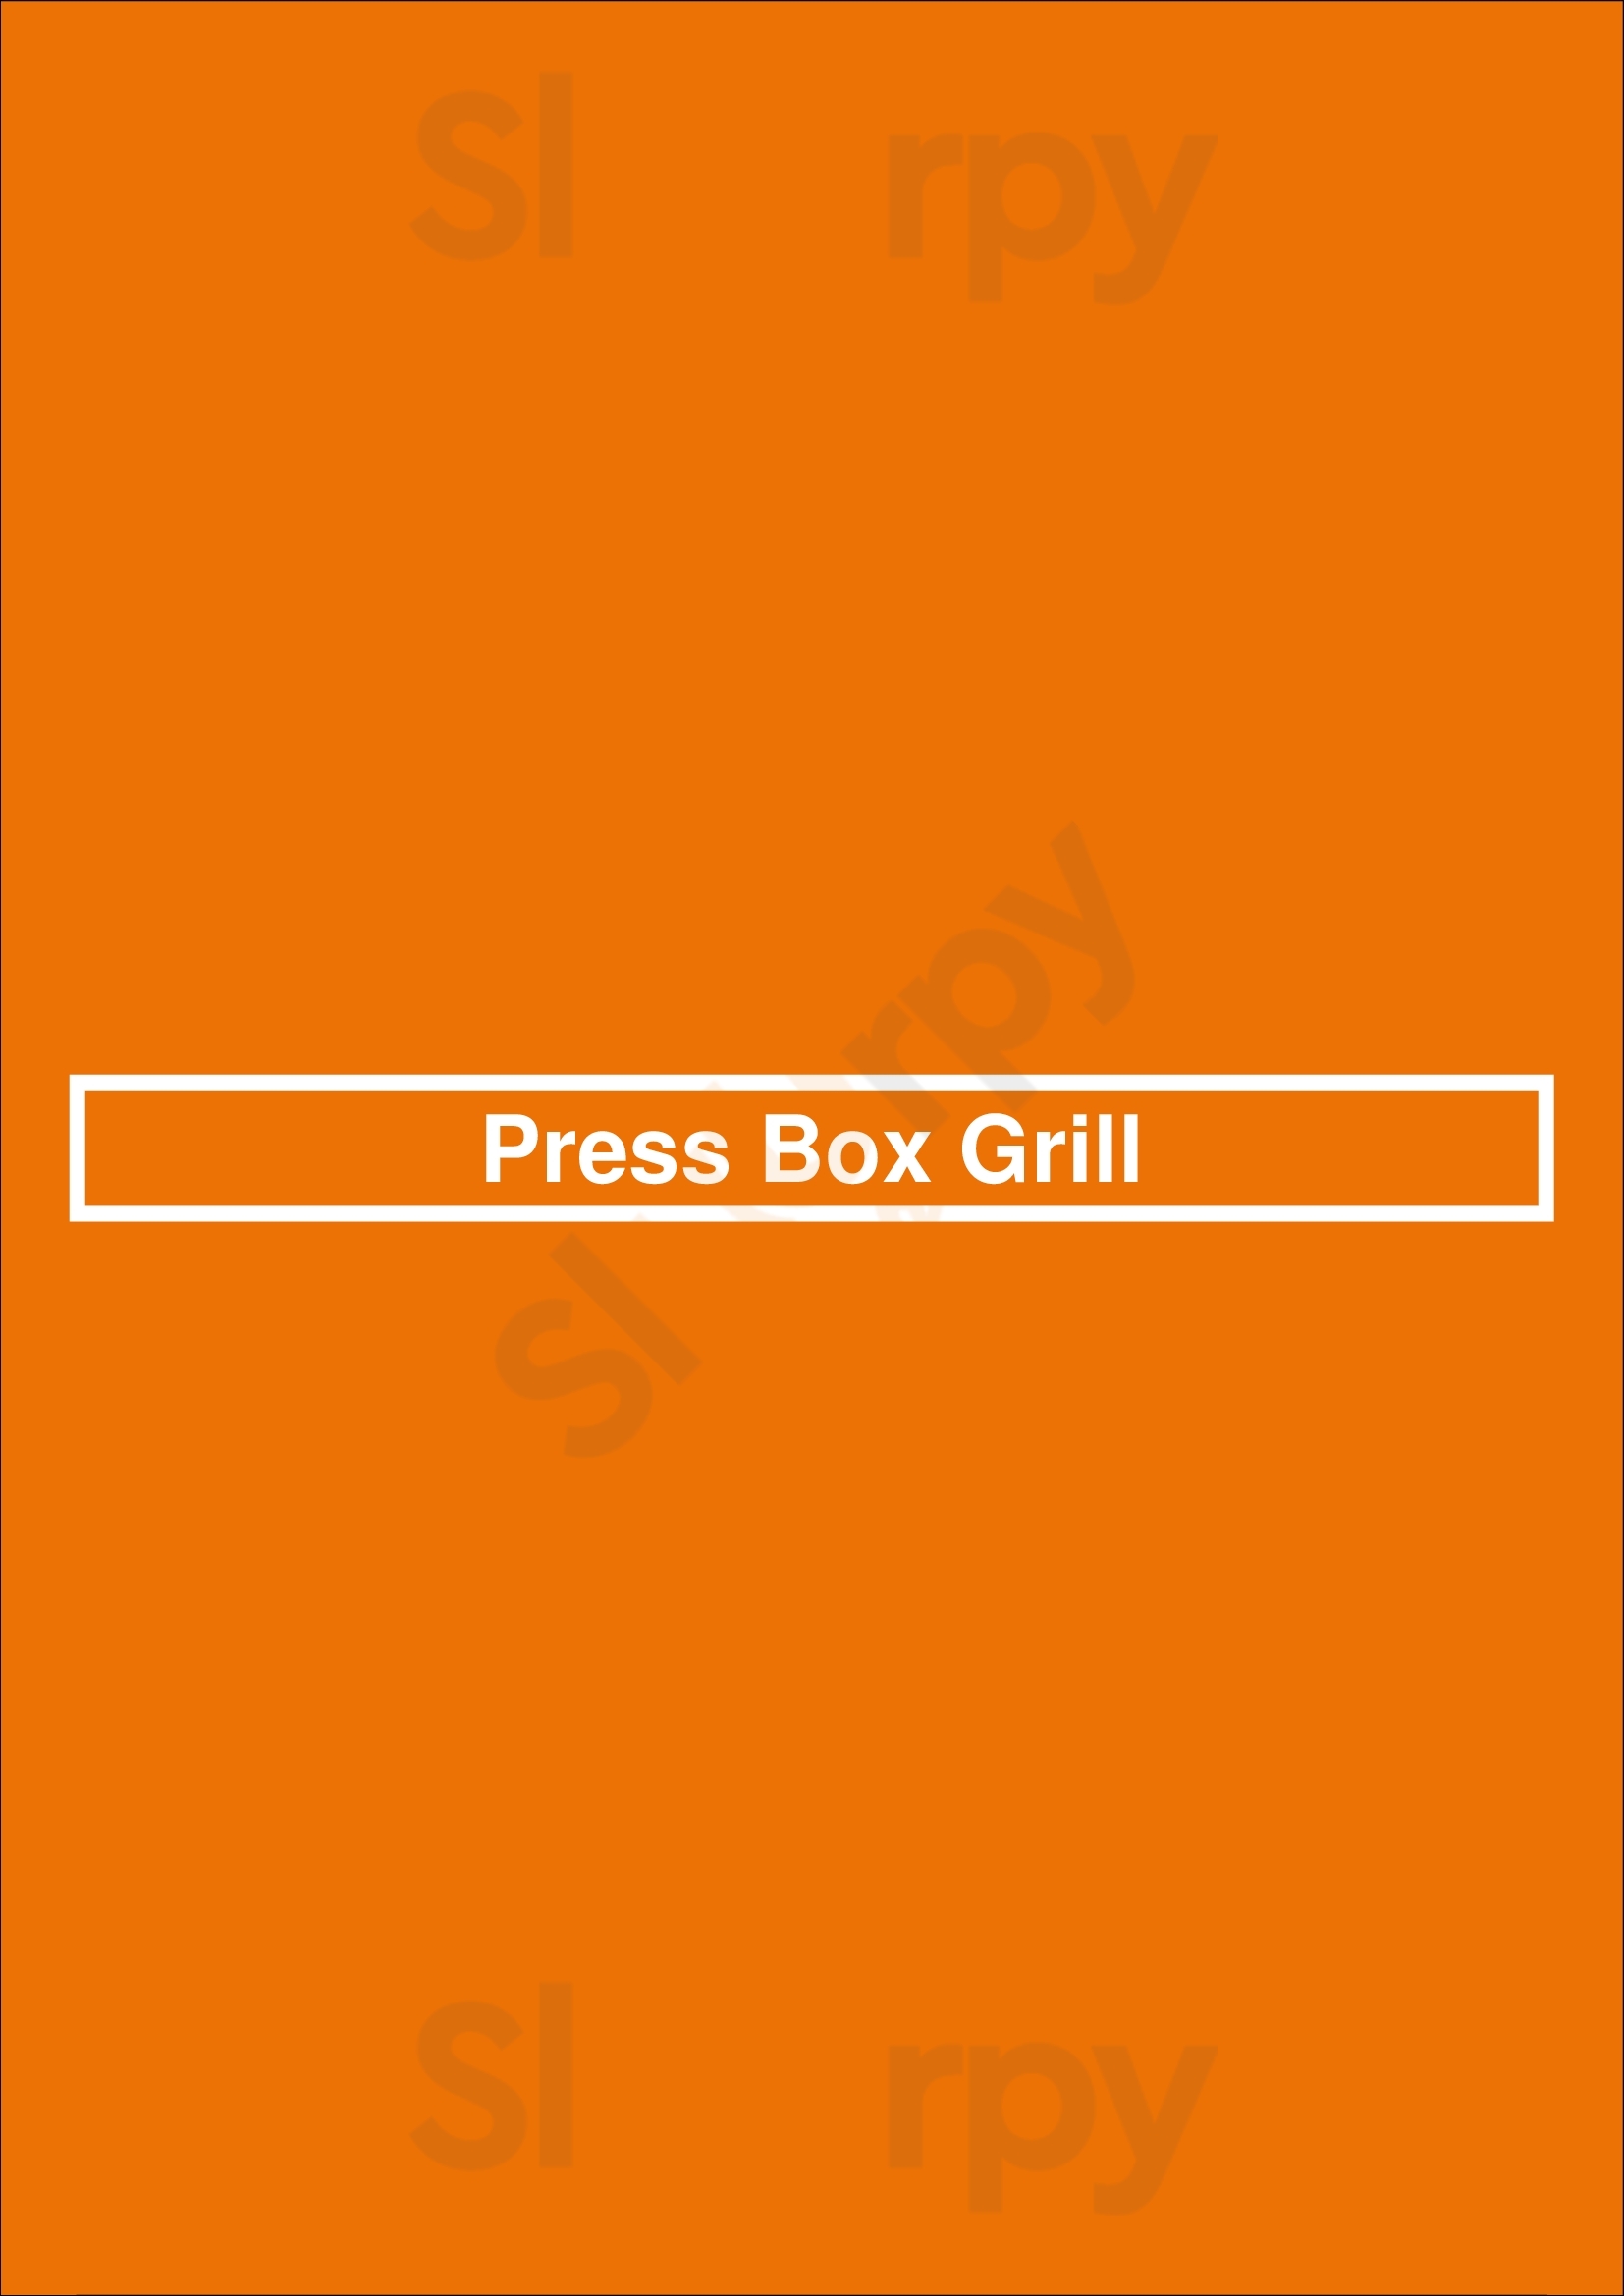 Press Box Grill Dallas Menu - 1